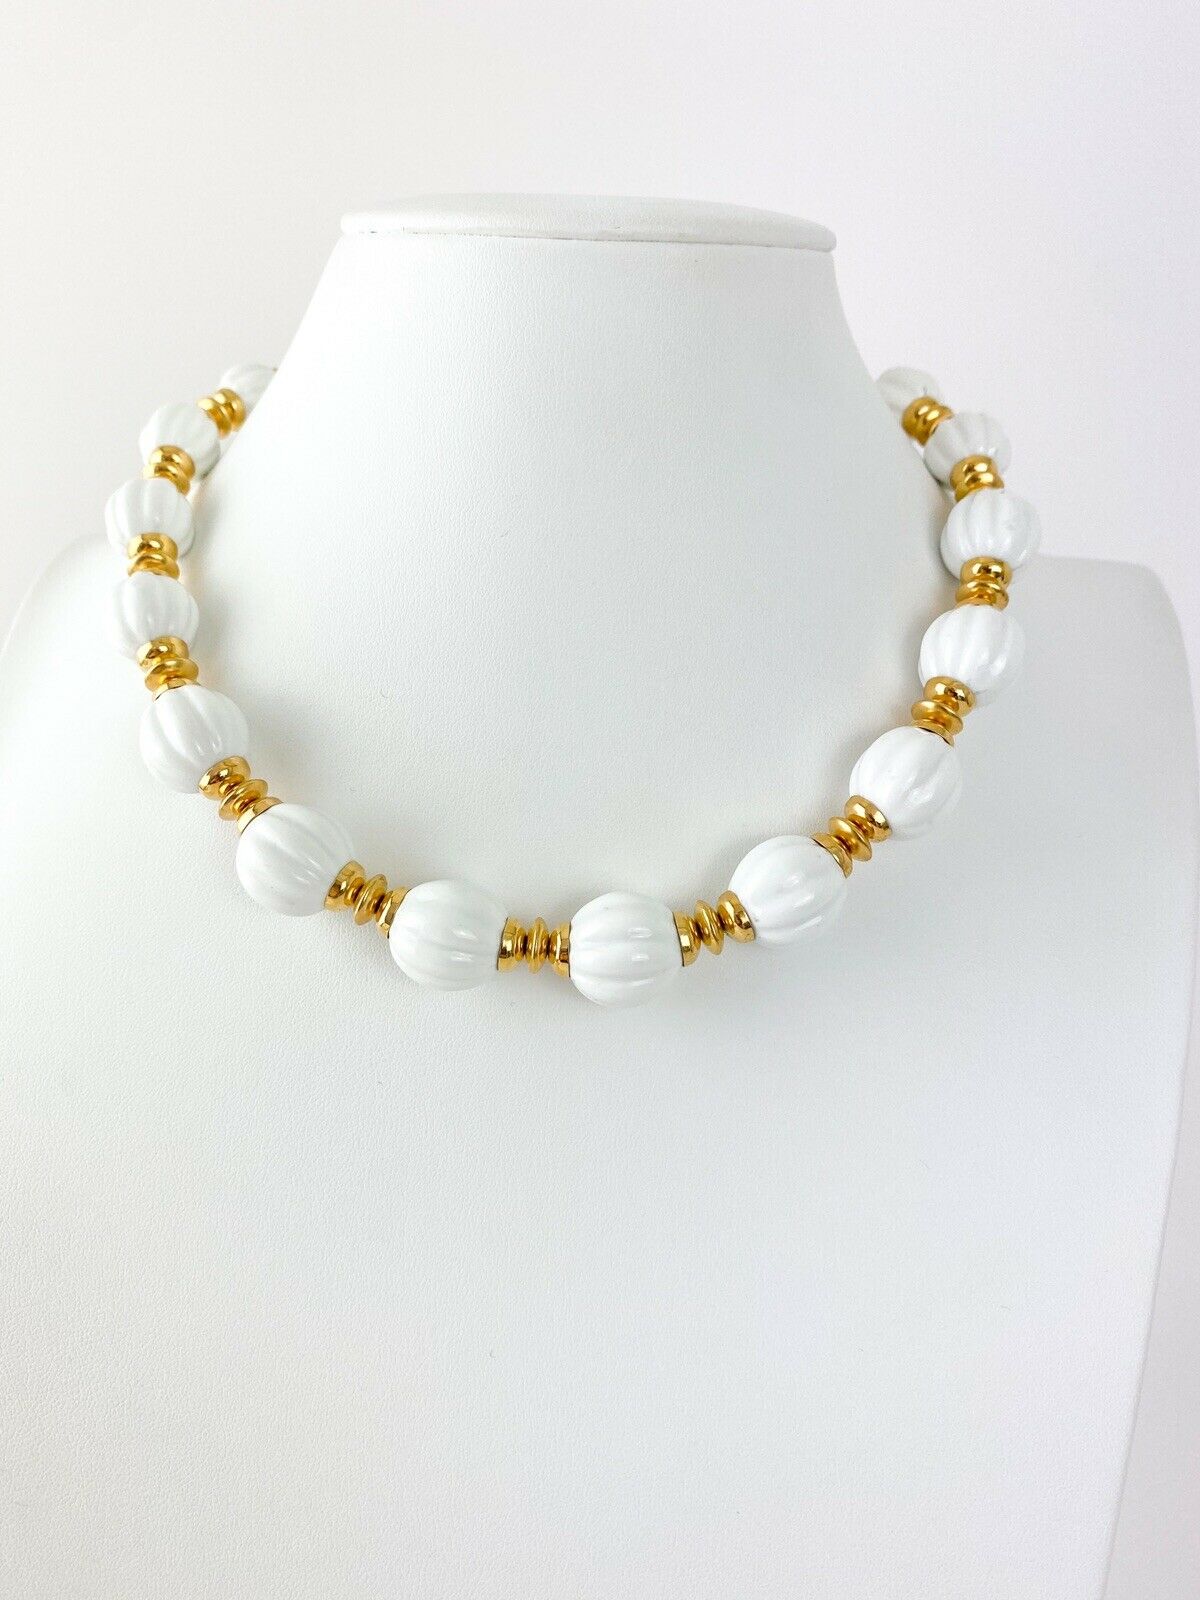 Pierre Balmain Paris Gold Tone Vintage Beaded Necklace White